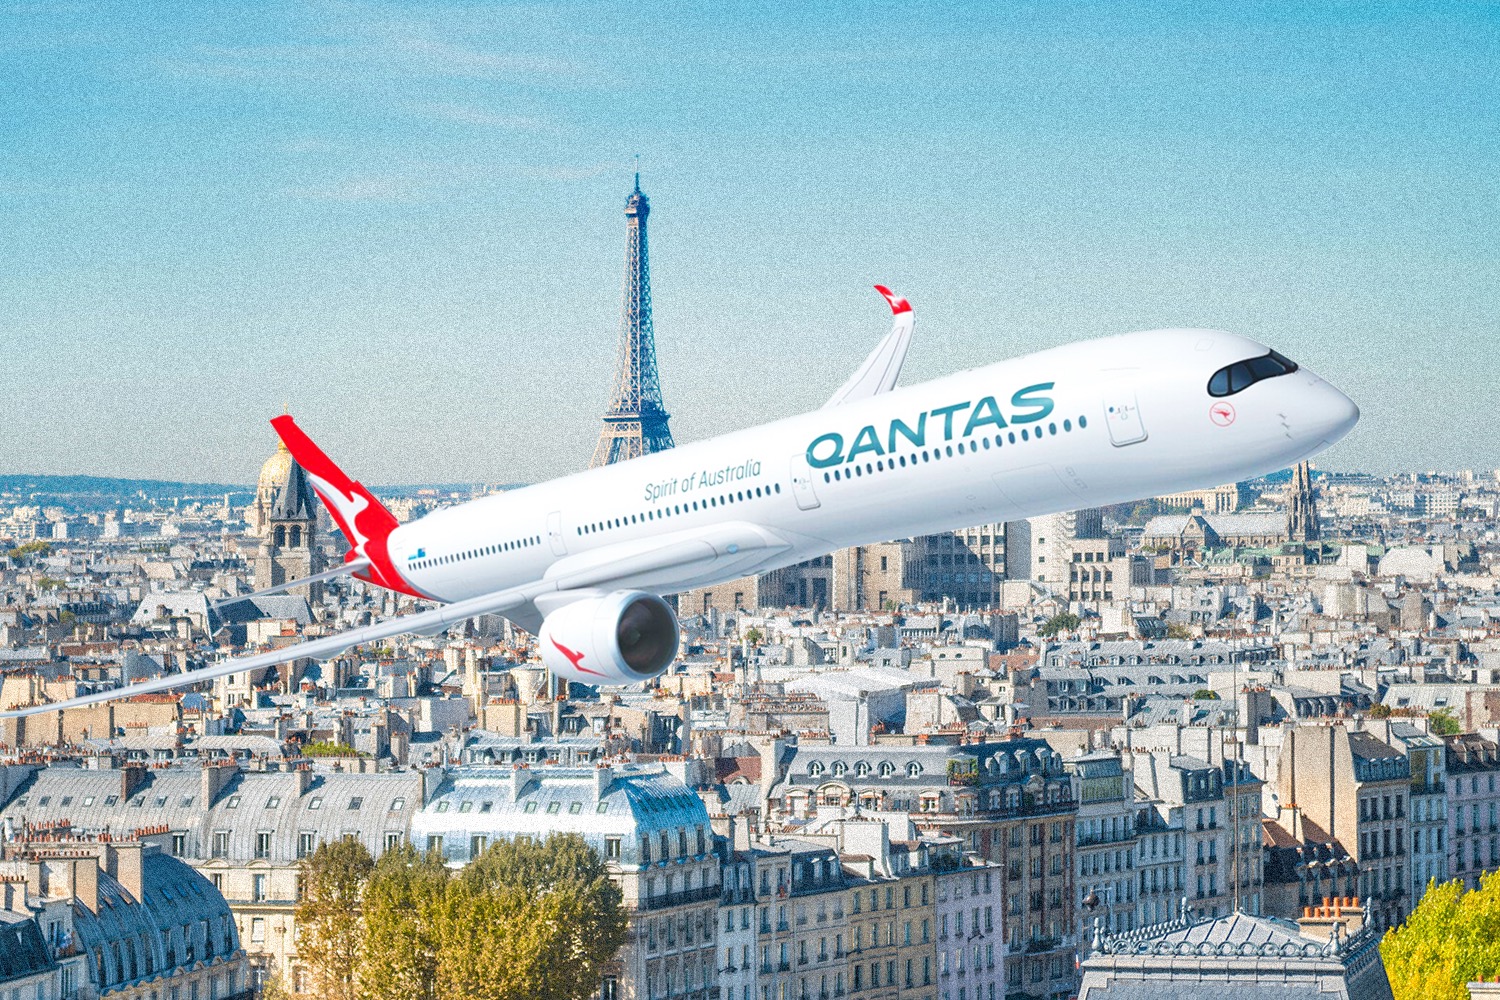 Qantas ‘Talking To Air France’ About Direct Australia-Paris Flights